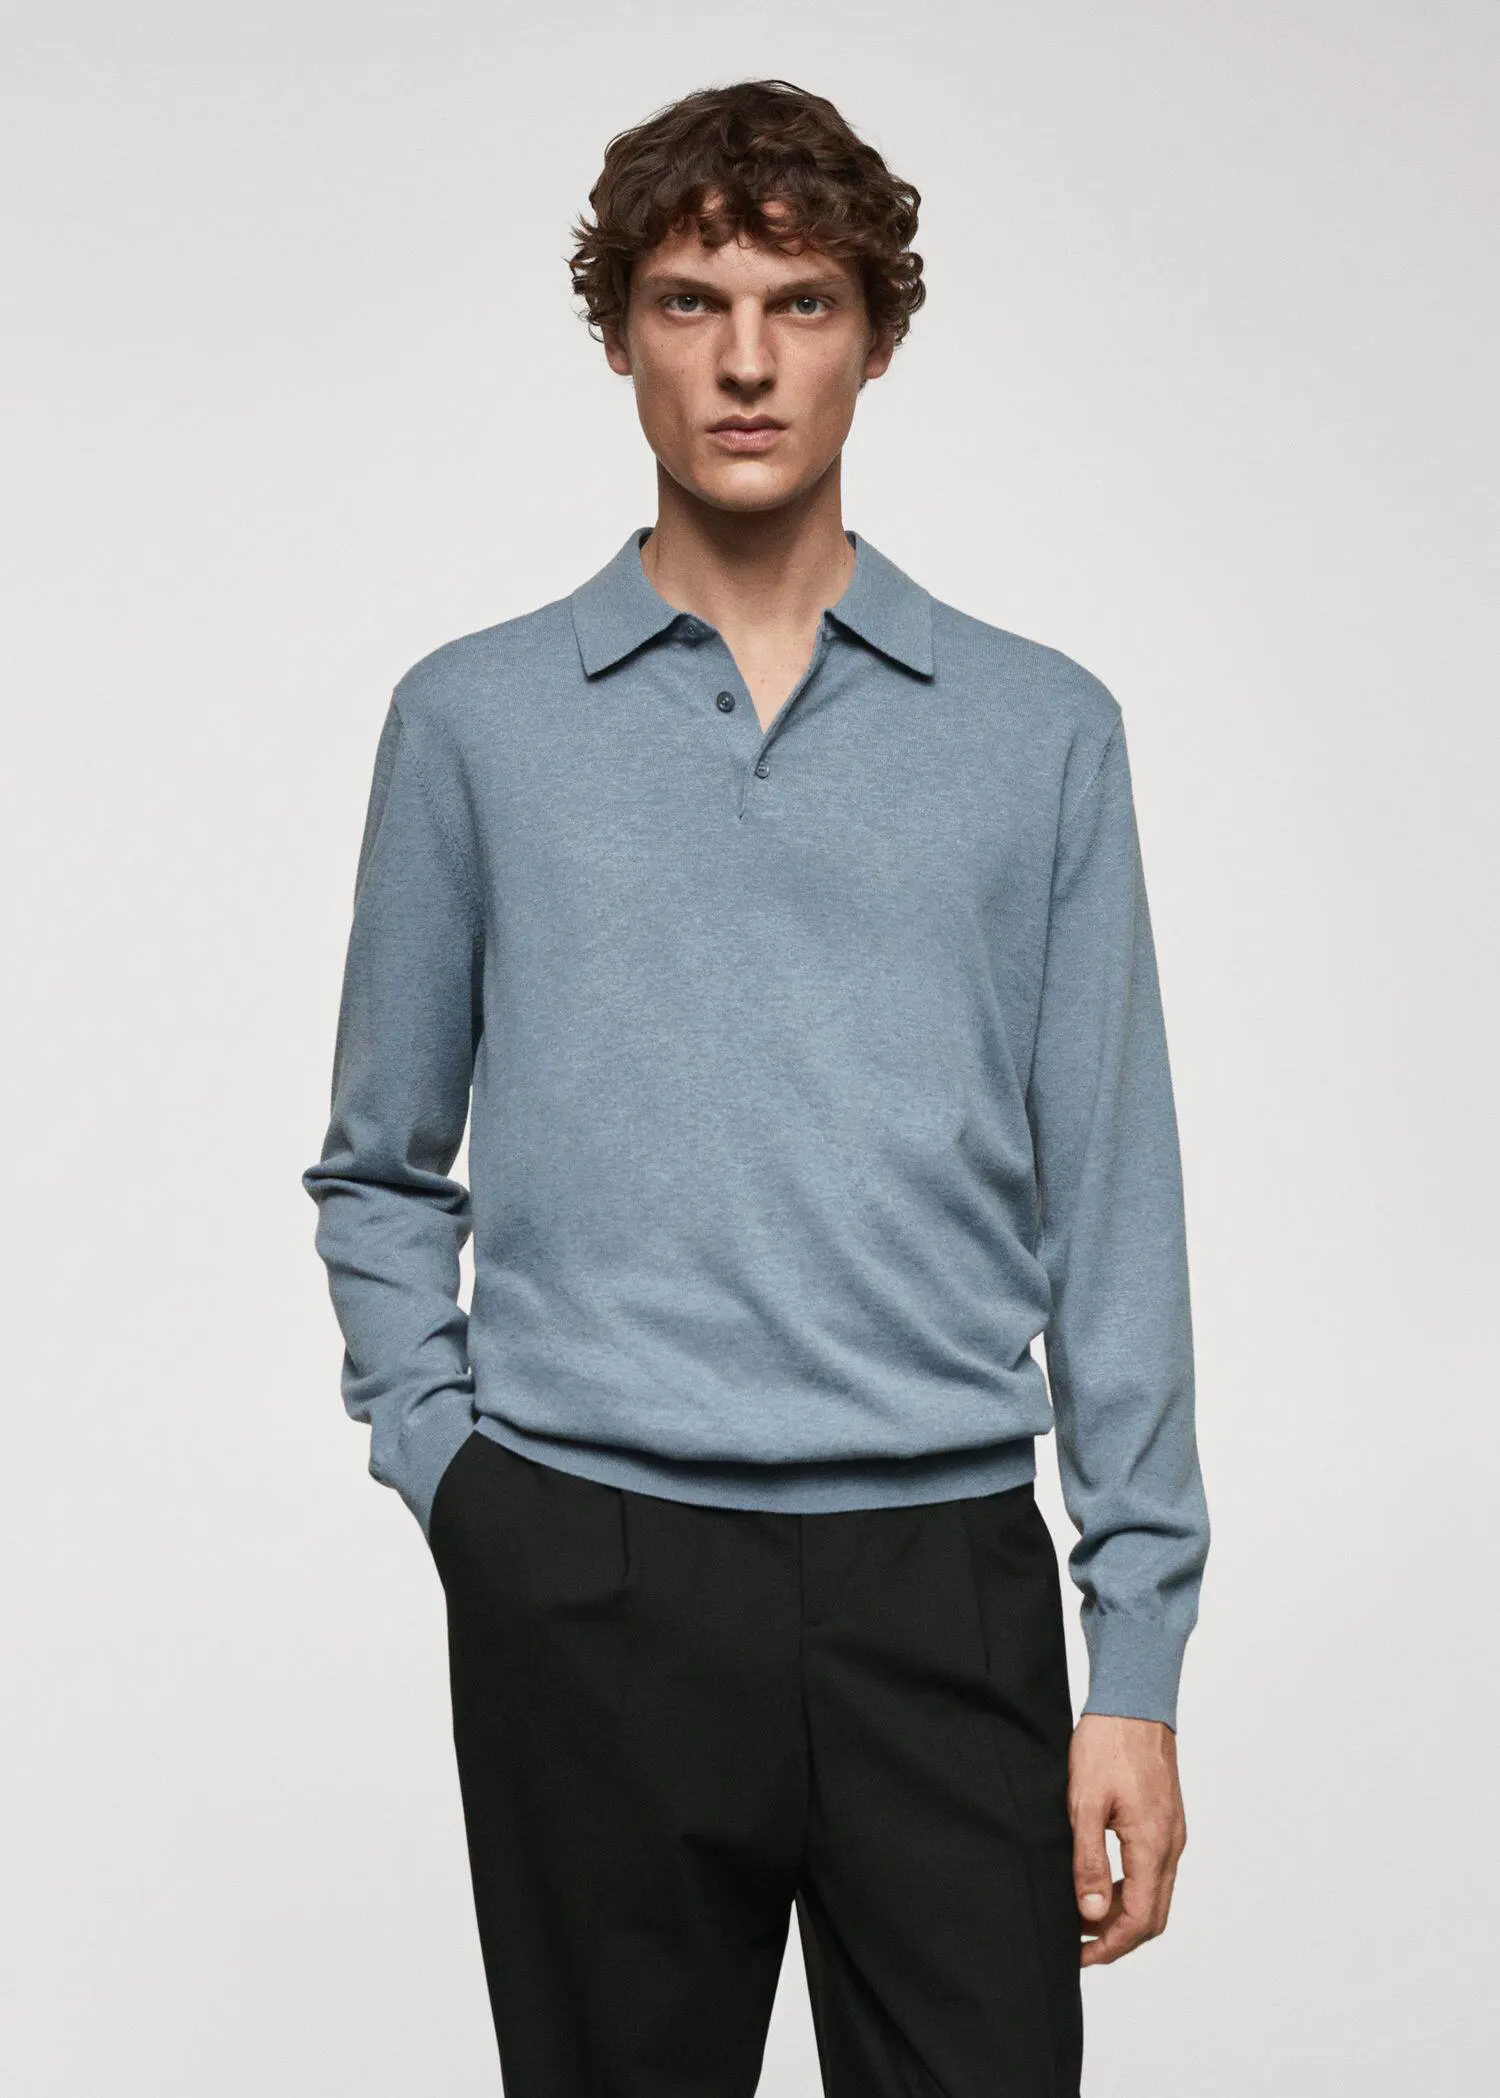 Mango Long-sleeved cotton jersey polo shirt. 2